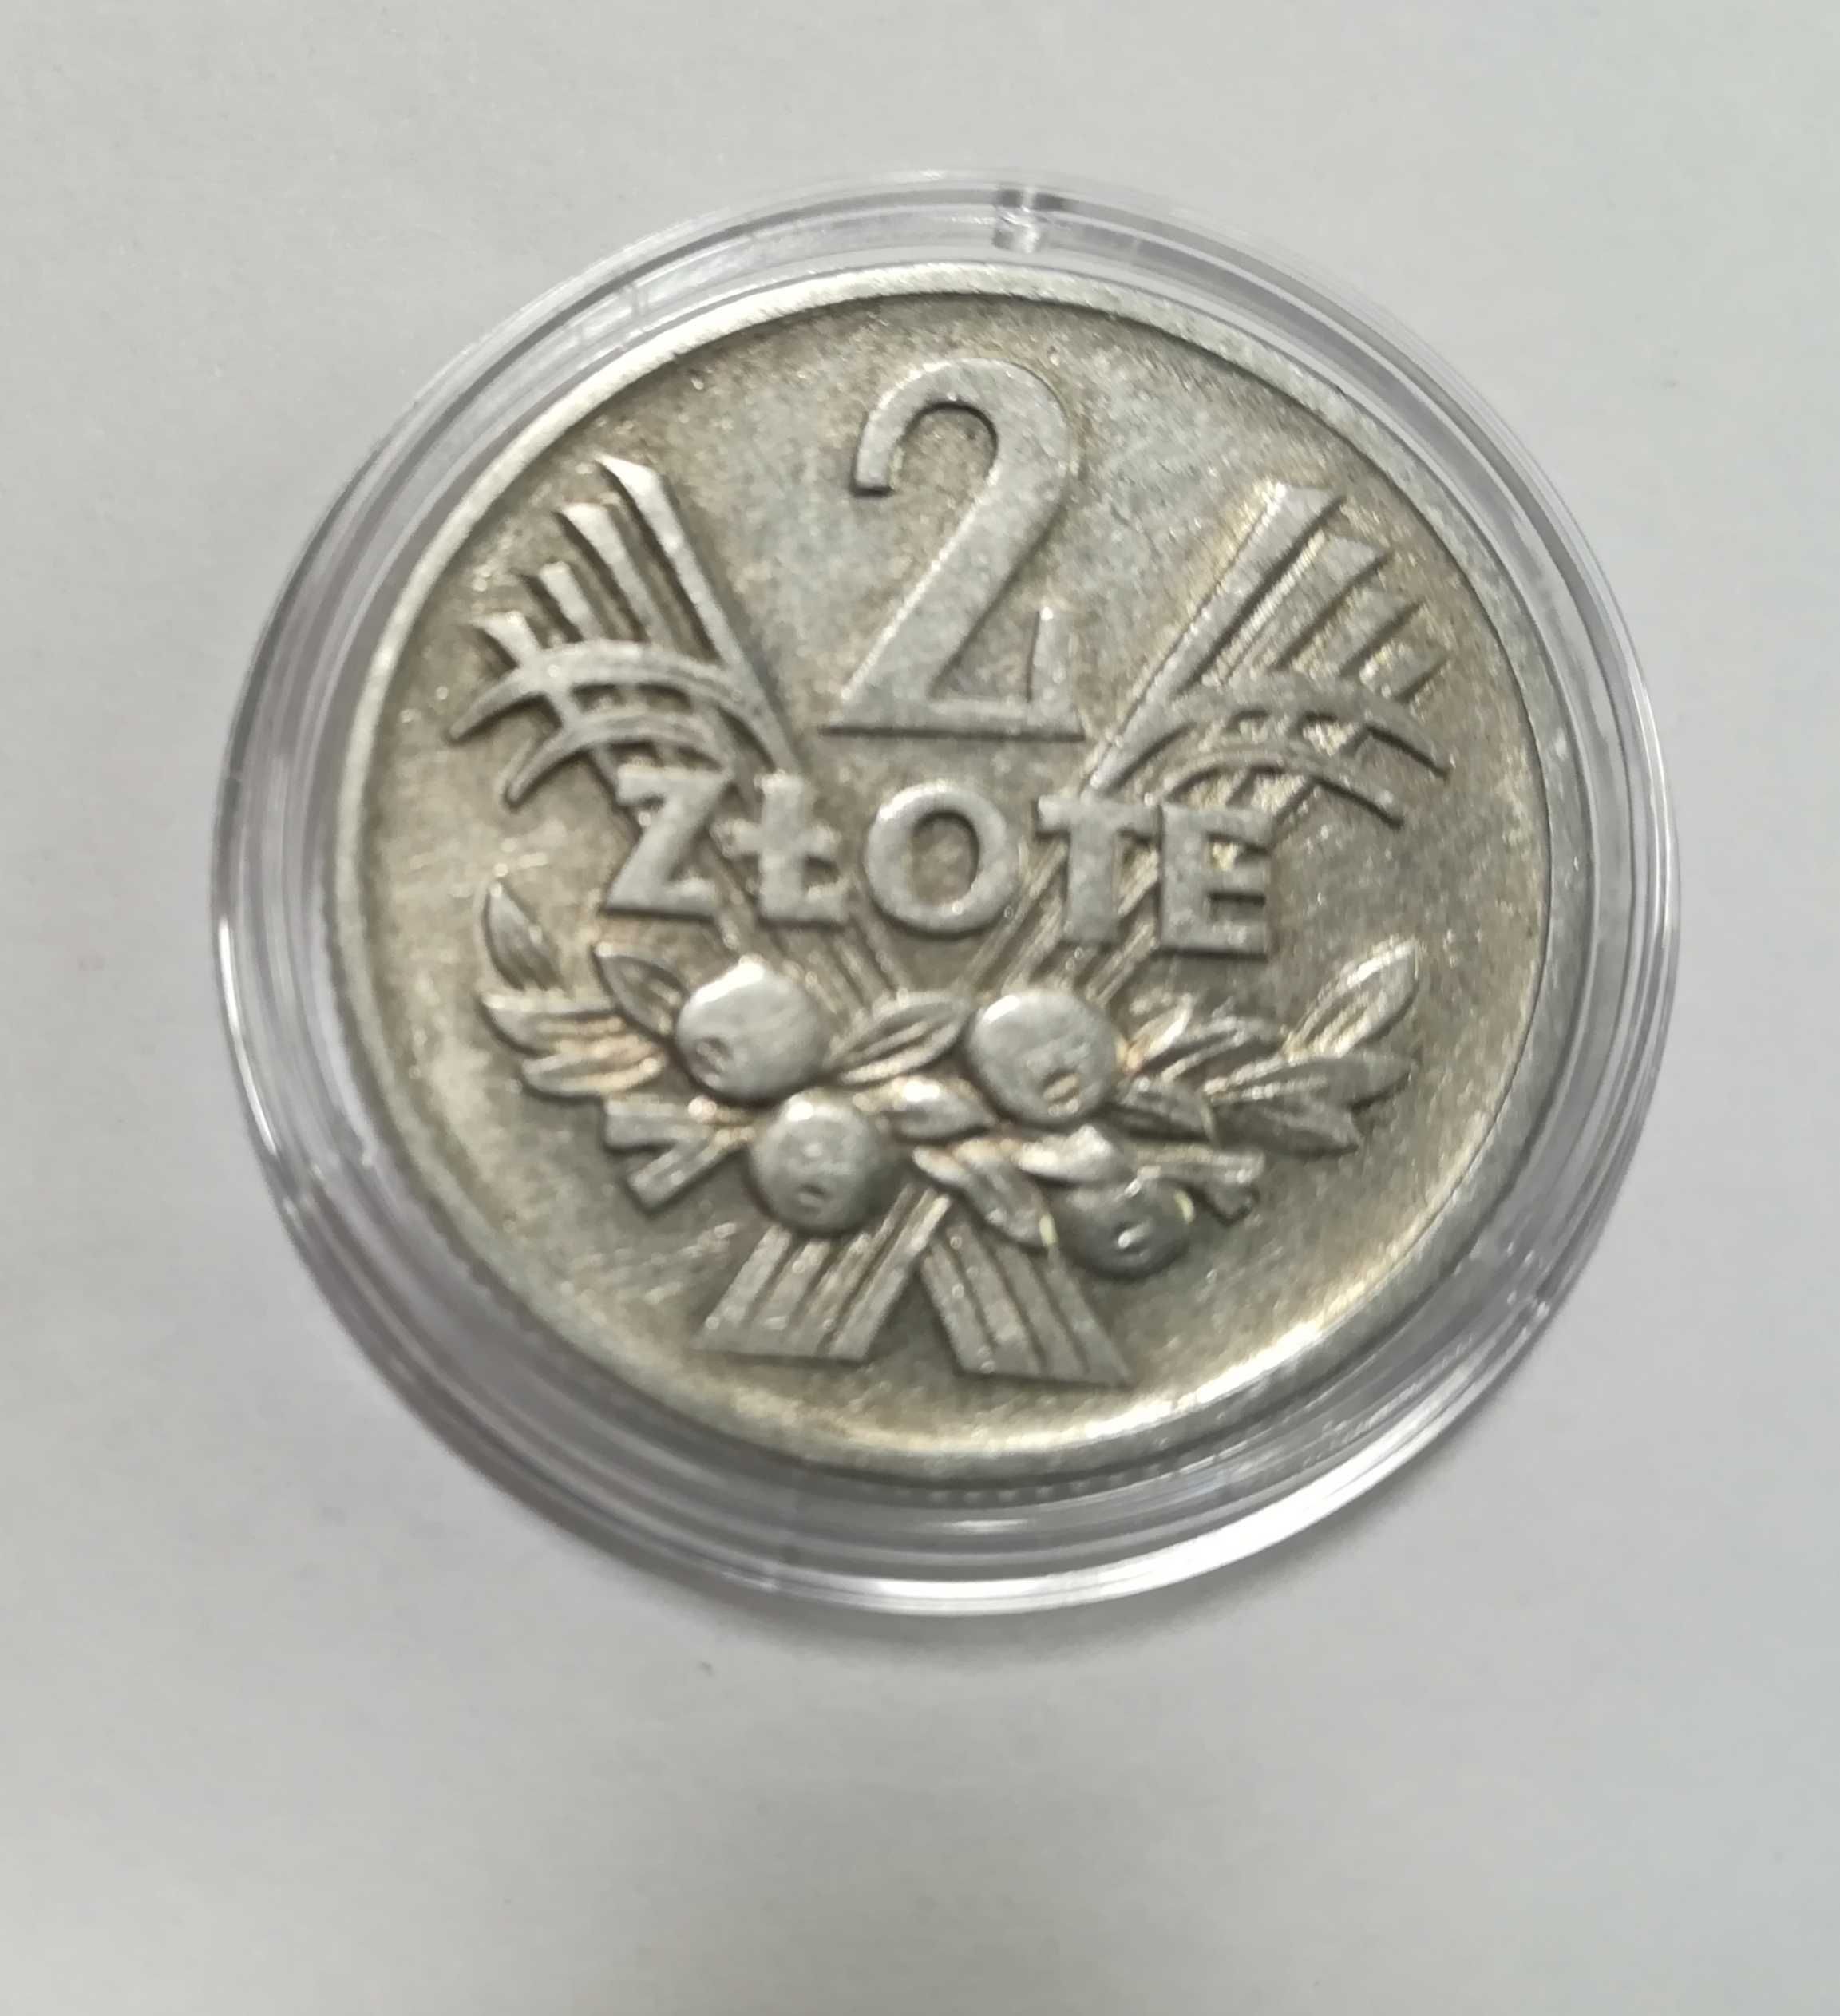 Moneta 2 zł "jagody" z 1958 r. Stan doskonały